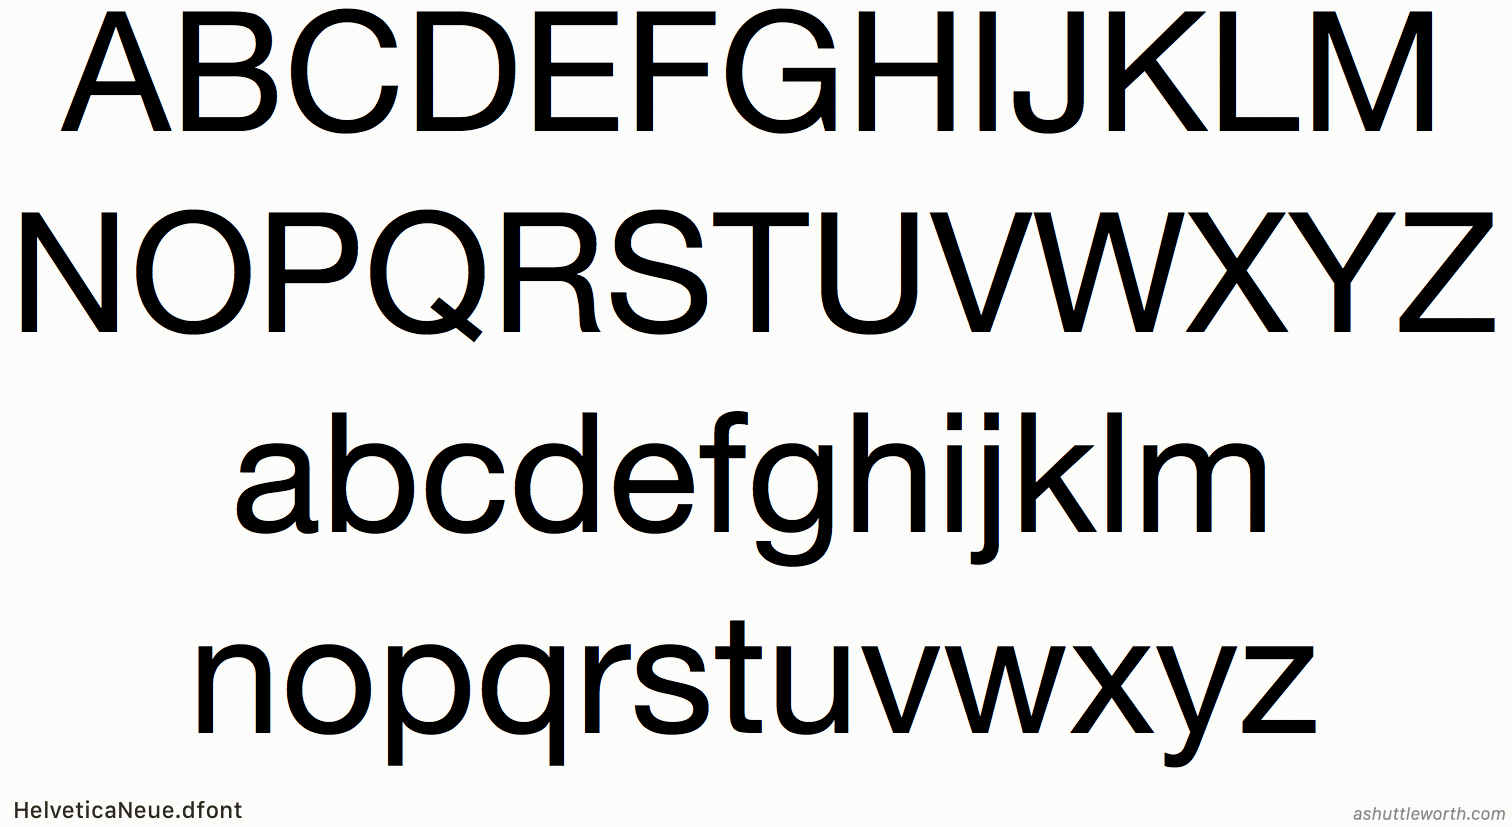 Helvetica neue web font free